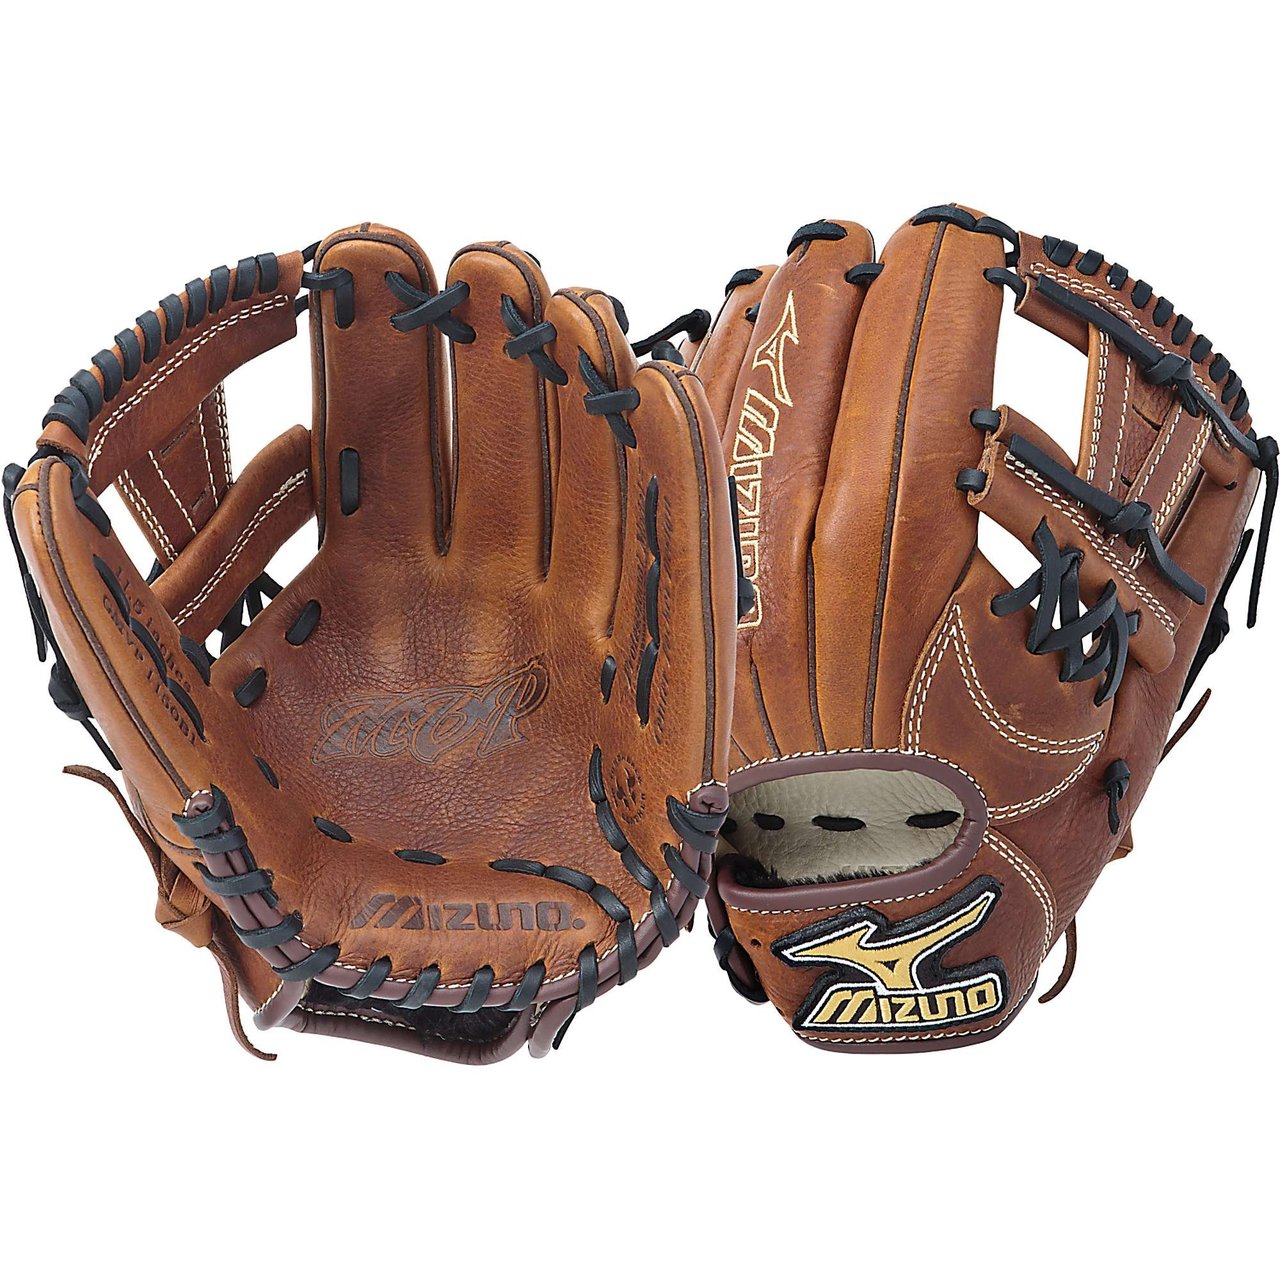 mizuno-gmvp1150b1-mvp-baseball-fielders-mitt-copper-11-50-inch-right-handed-throw GMVP1150B1-Right Handed Throw Mizuno 041969368206 The Mizuno GMVP1150B1 is an 11.50-Inch infielders glove made from soft